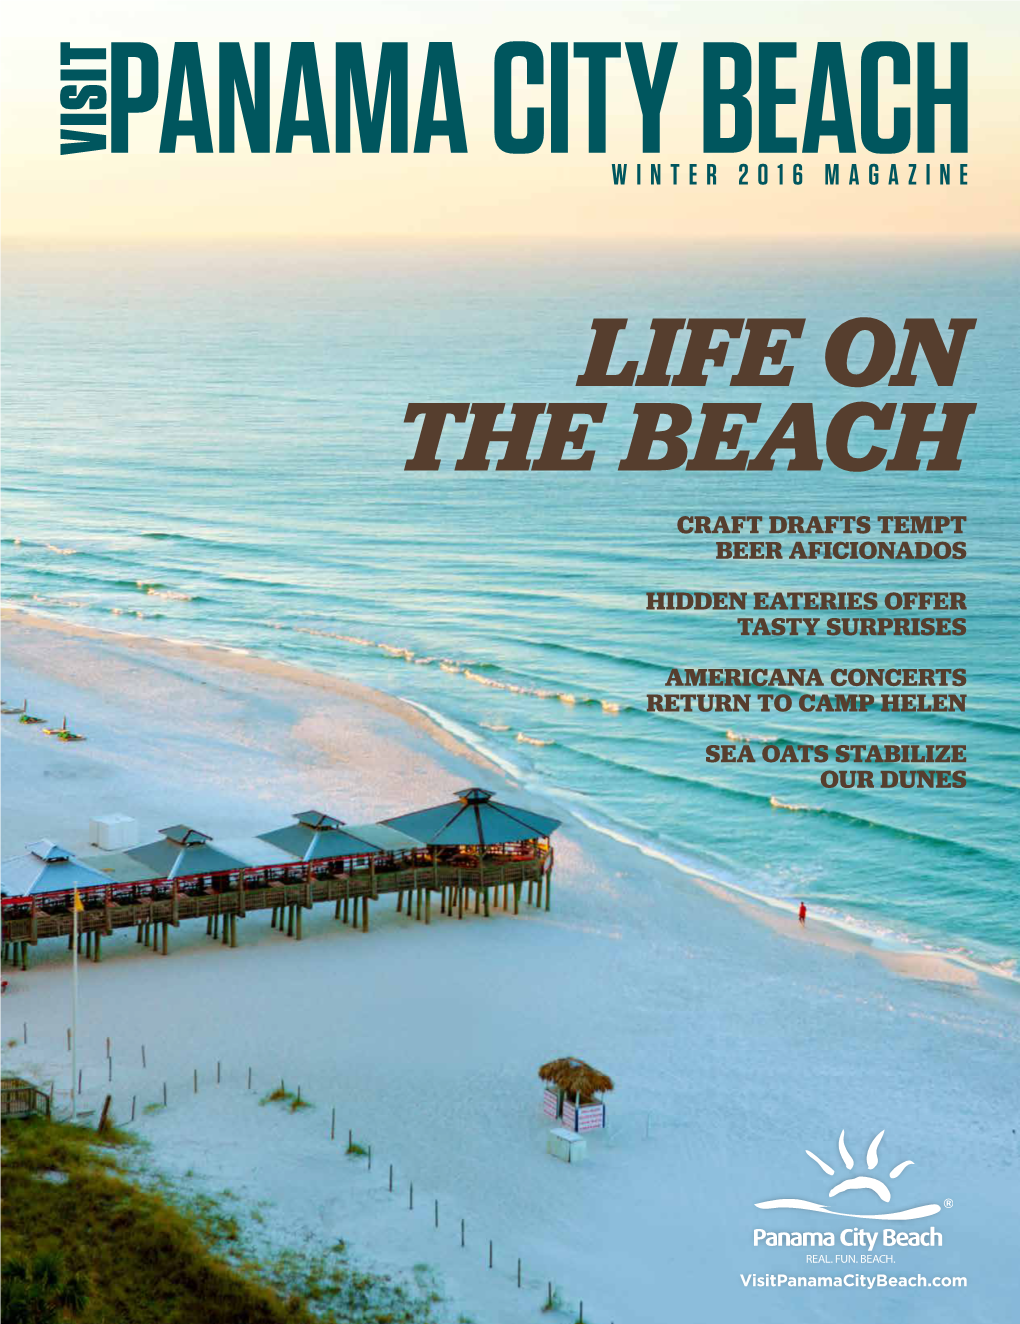 Panama City Beach Winter 2016 Magazine